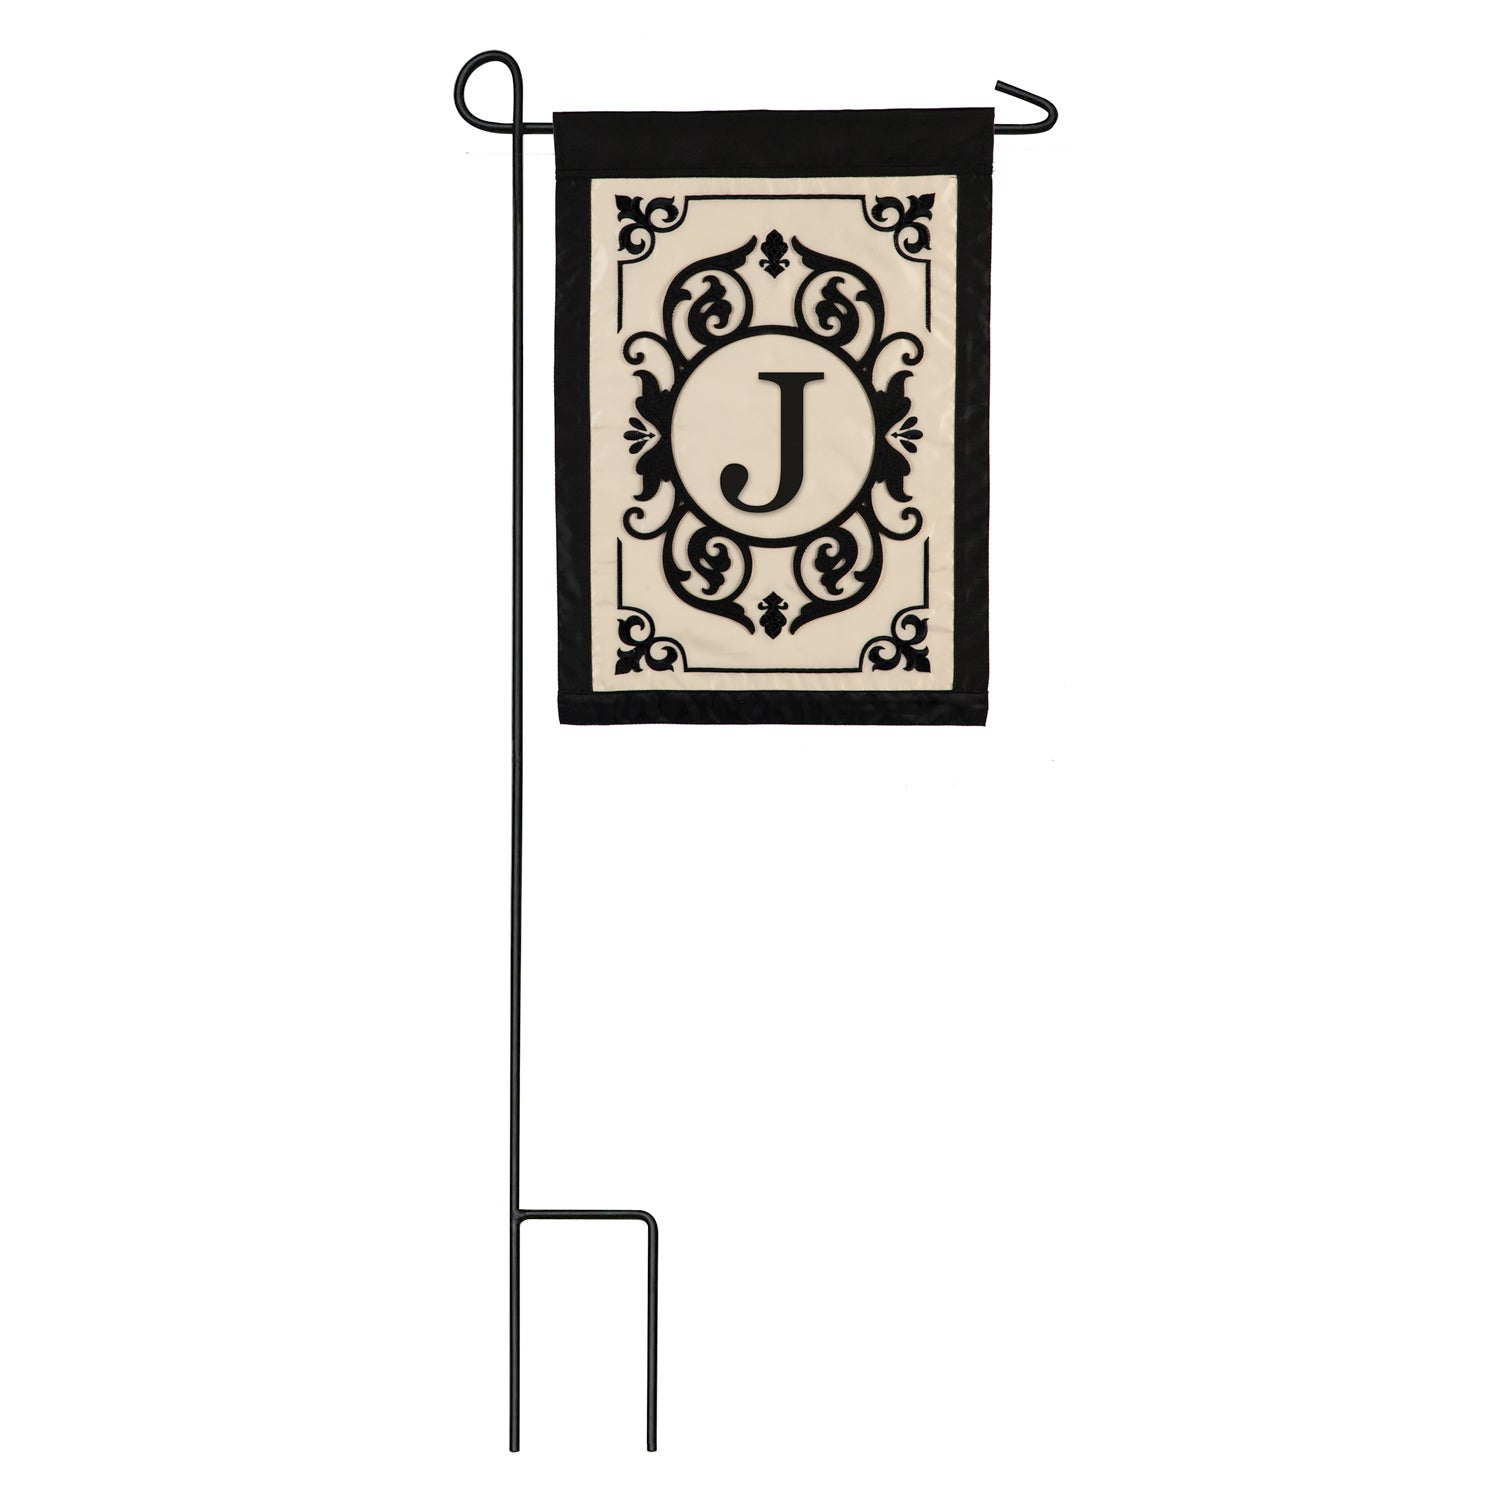 Cambridge Monogram Garden Applique Flag, Letter J